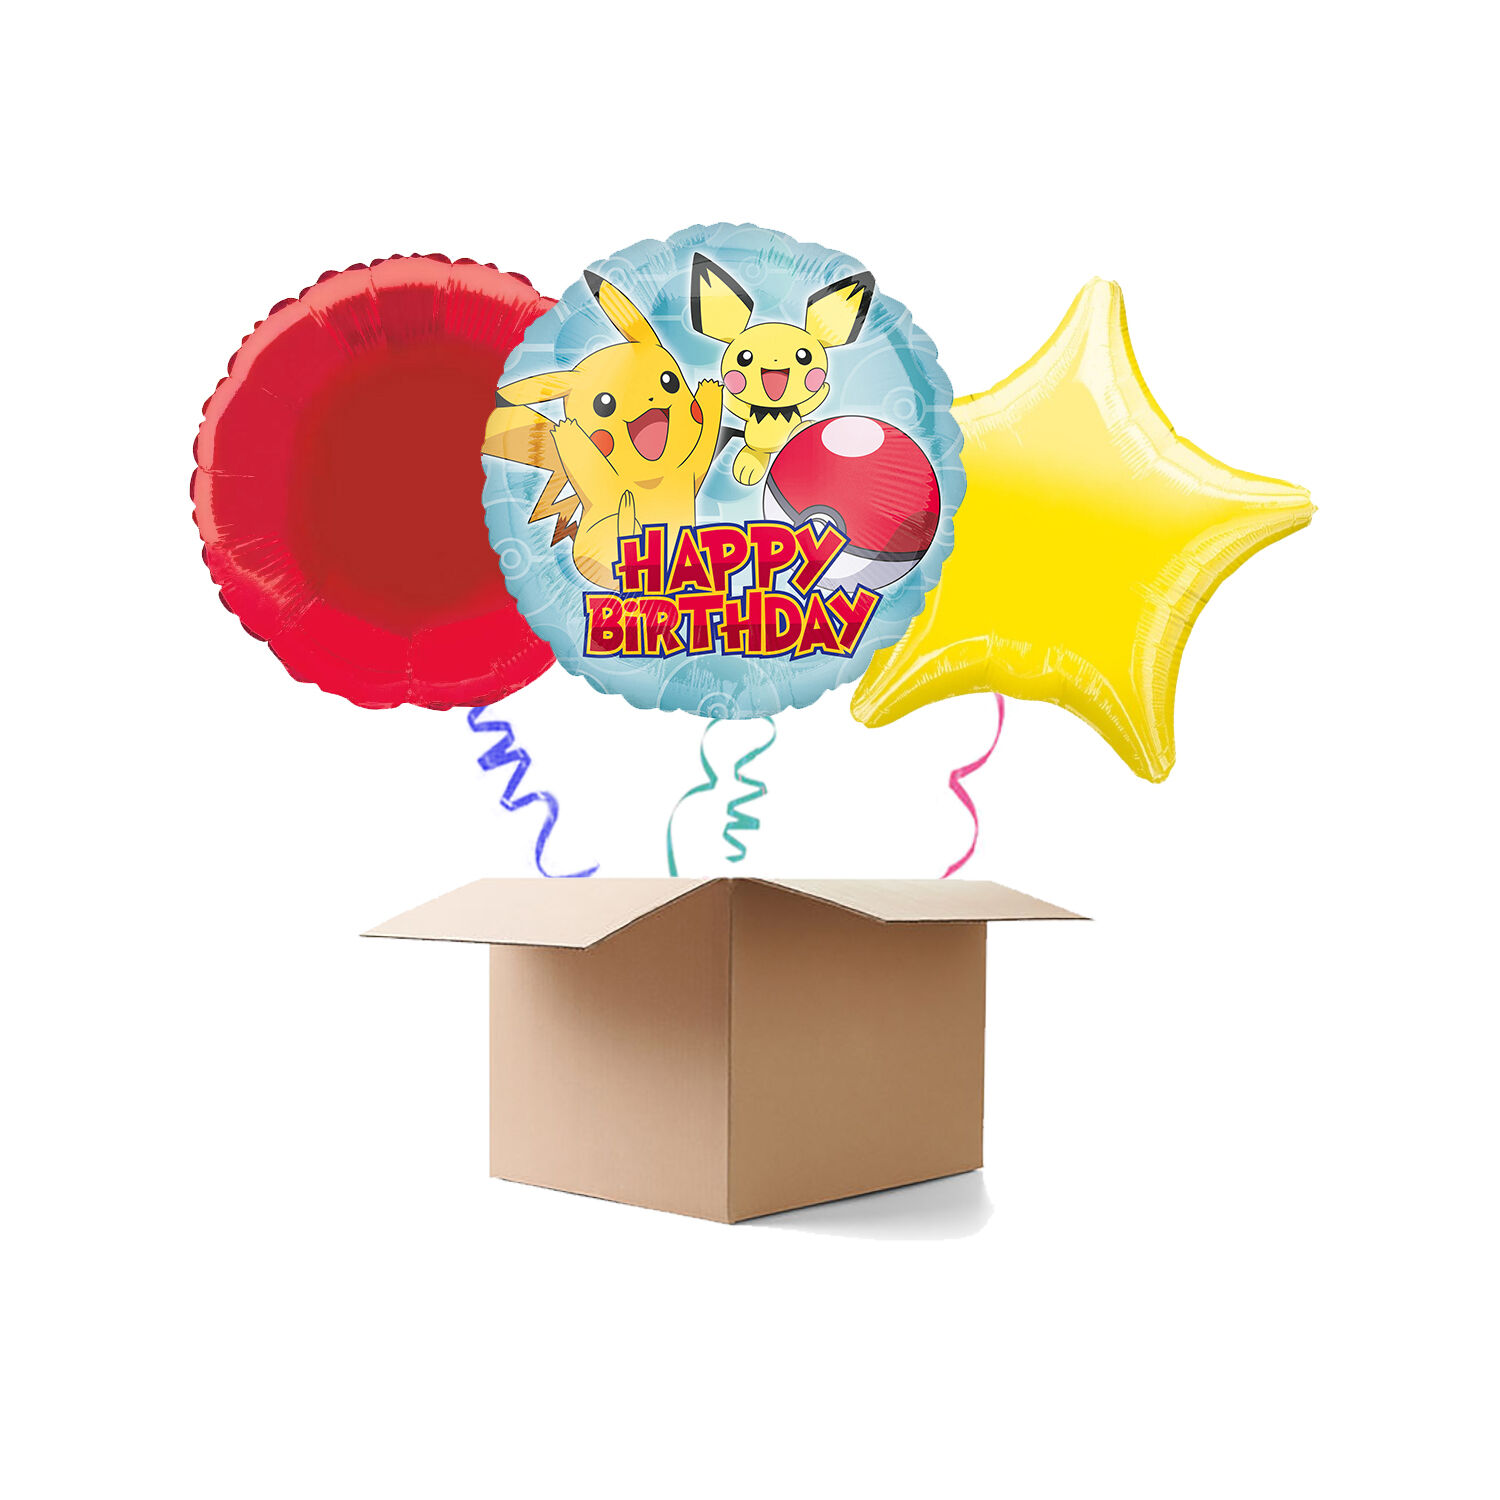 NEU Ballongre Happy Birthday Pokemon, 3 Ballons